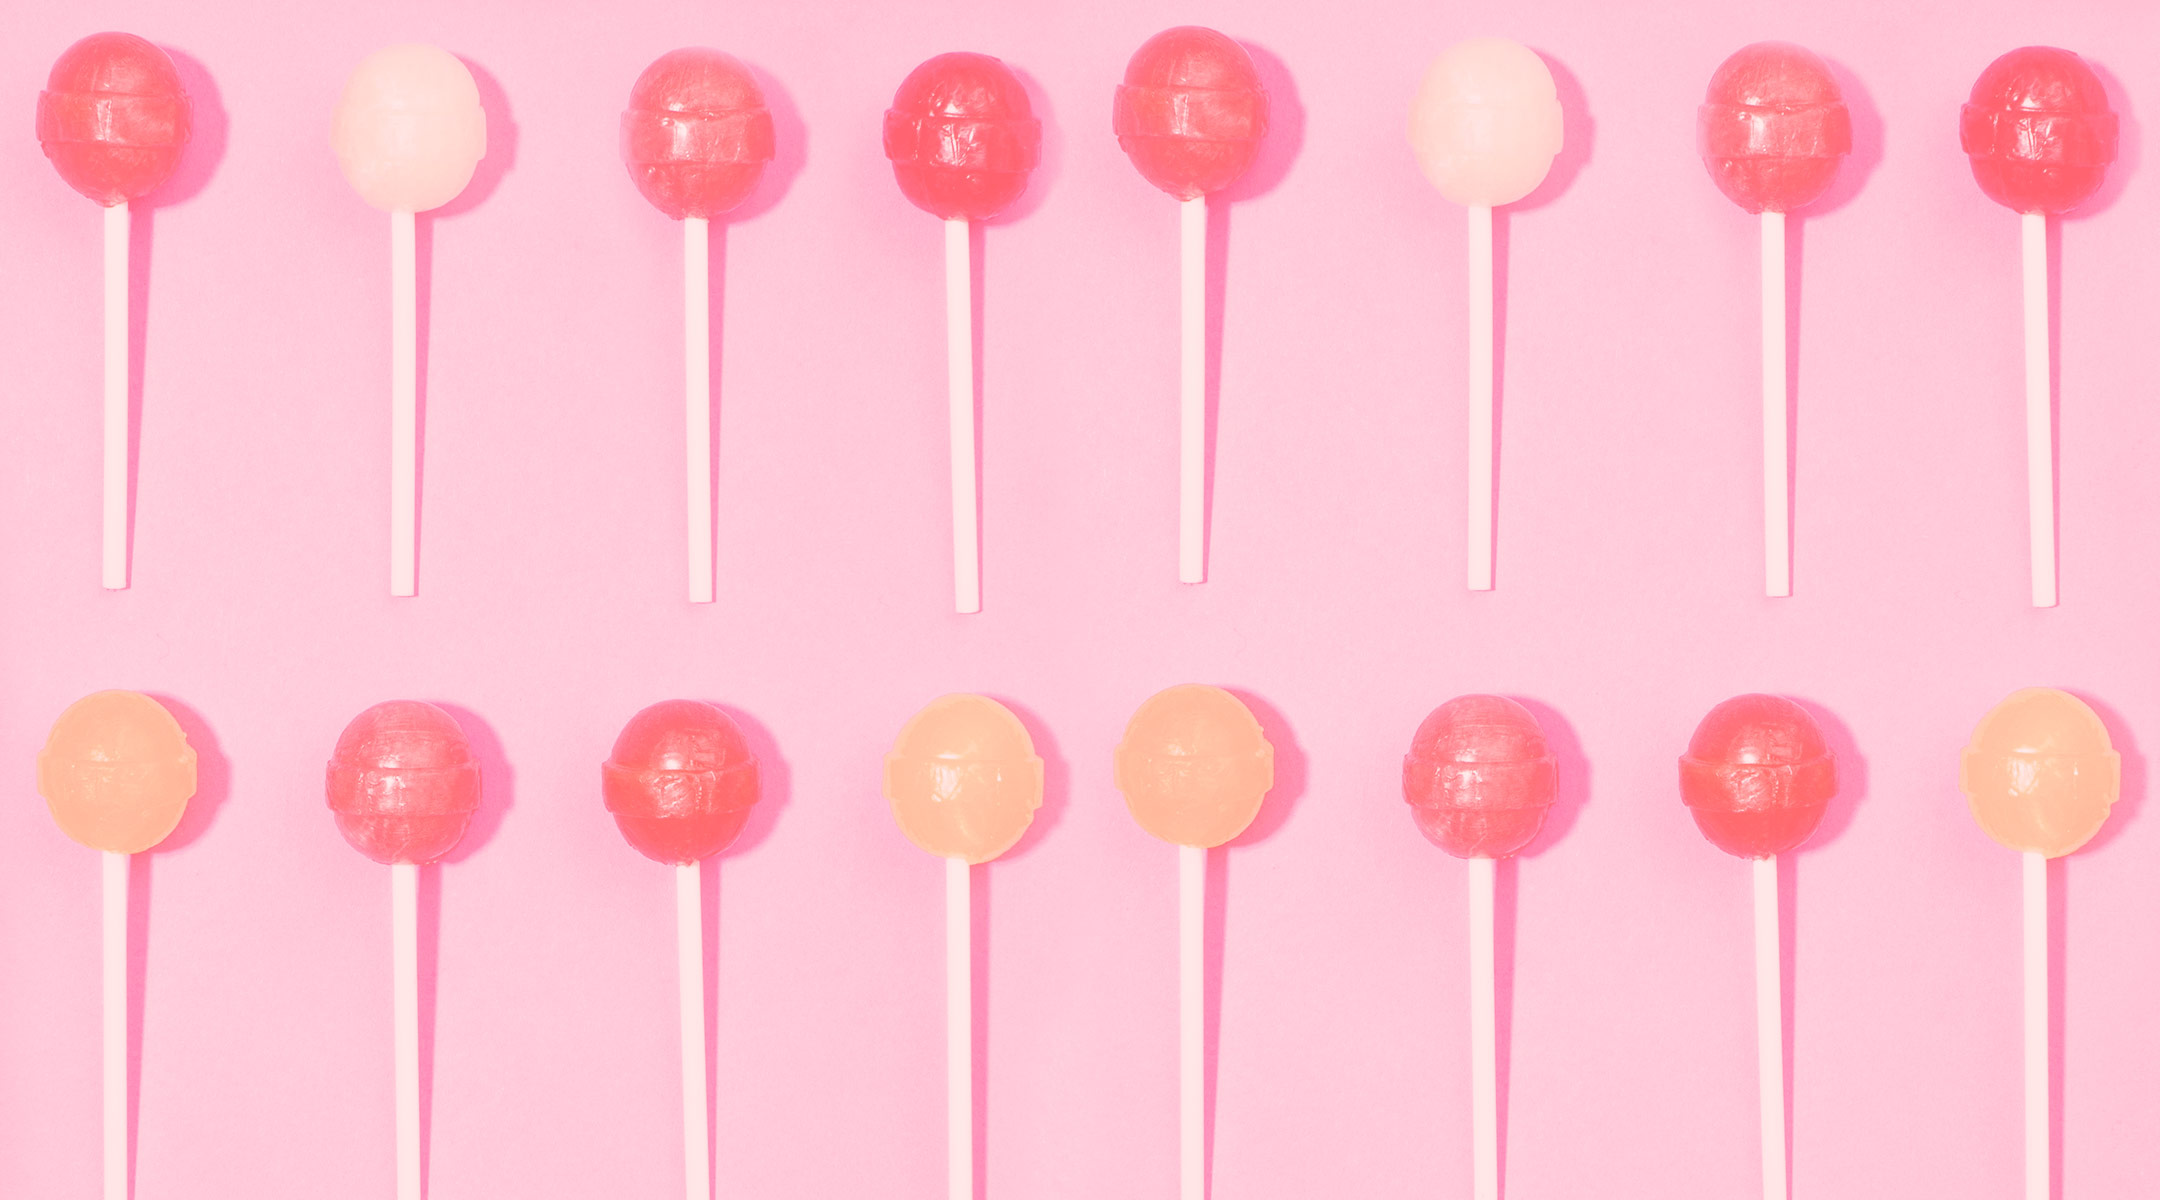 two rows of lollipops shot overhead